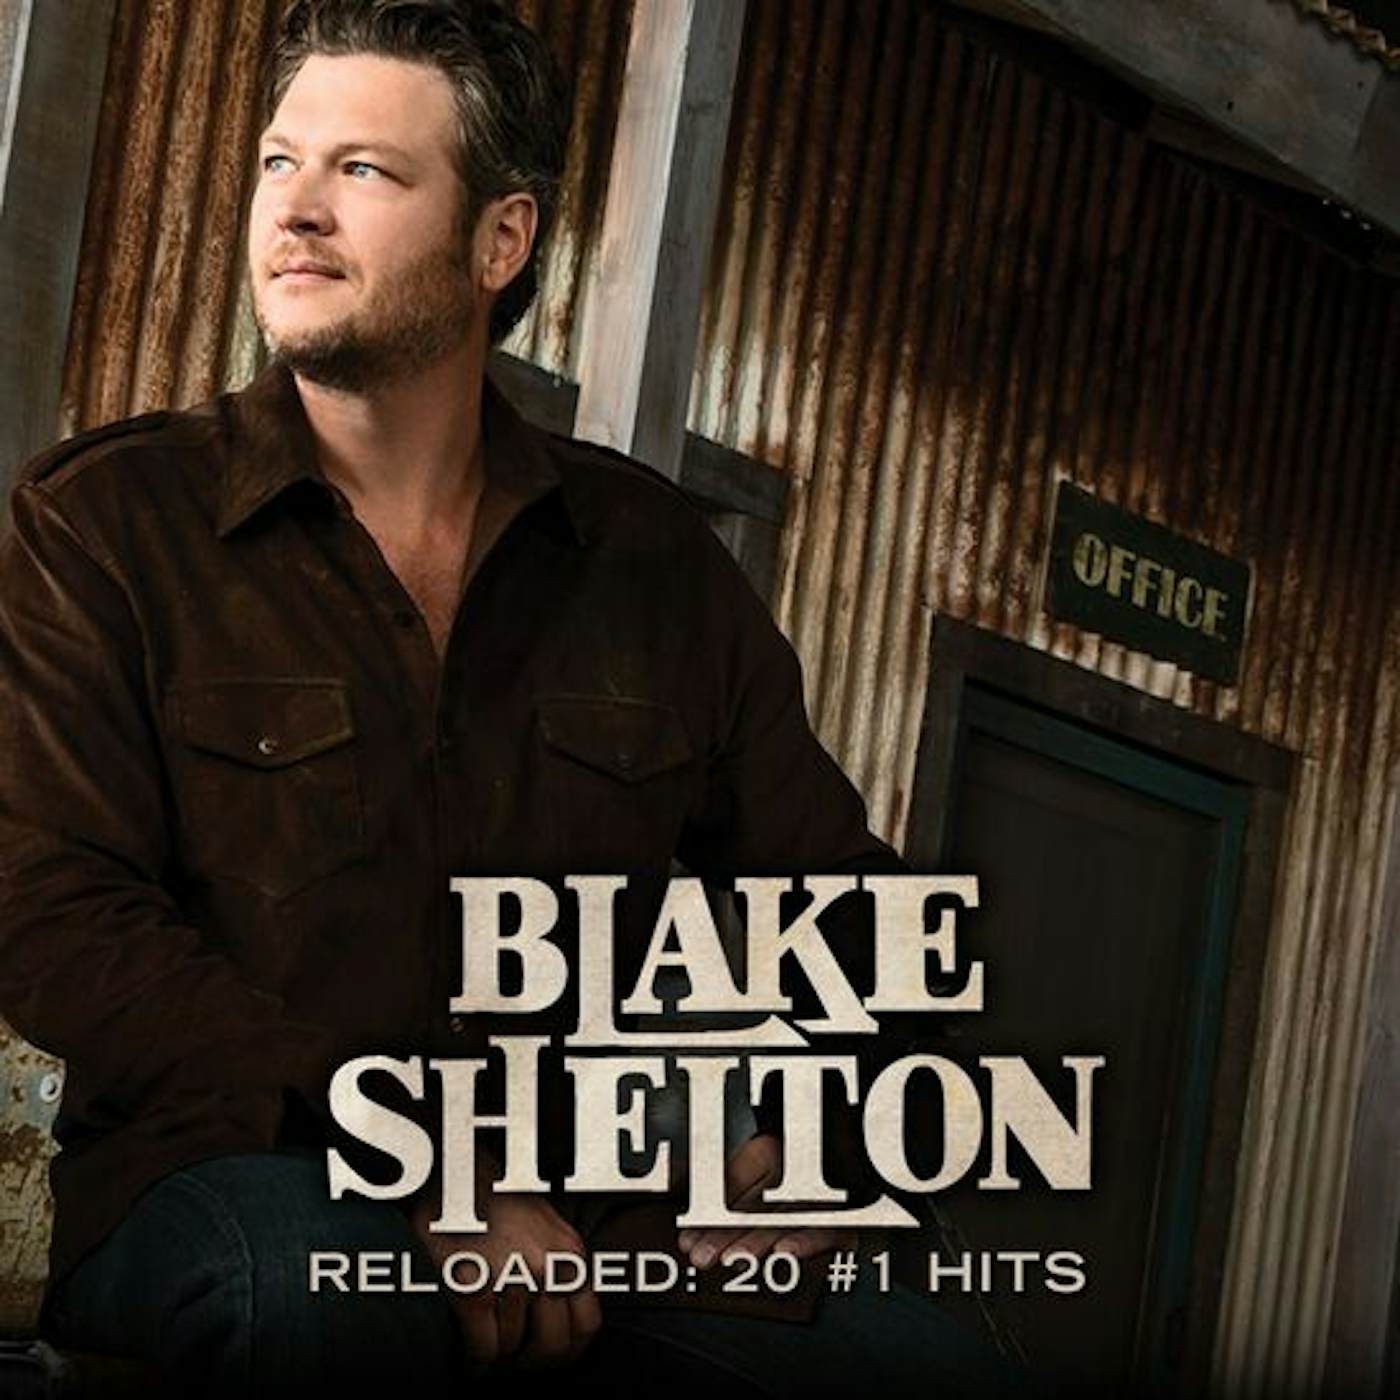 Blake Shelton Reloaded: 20 #1 Hits CD